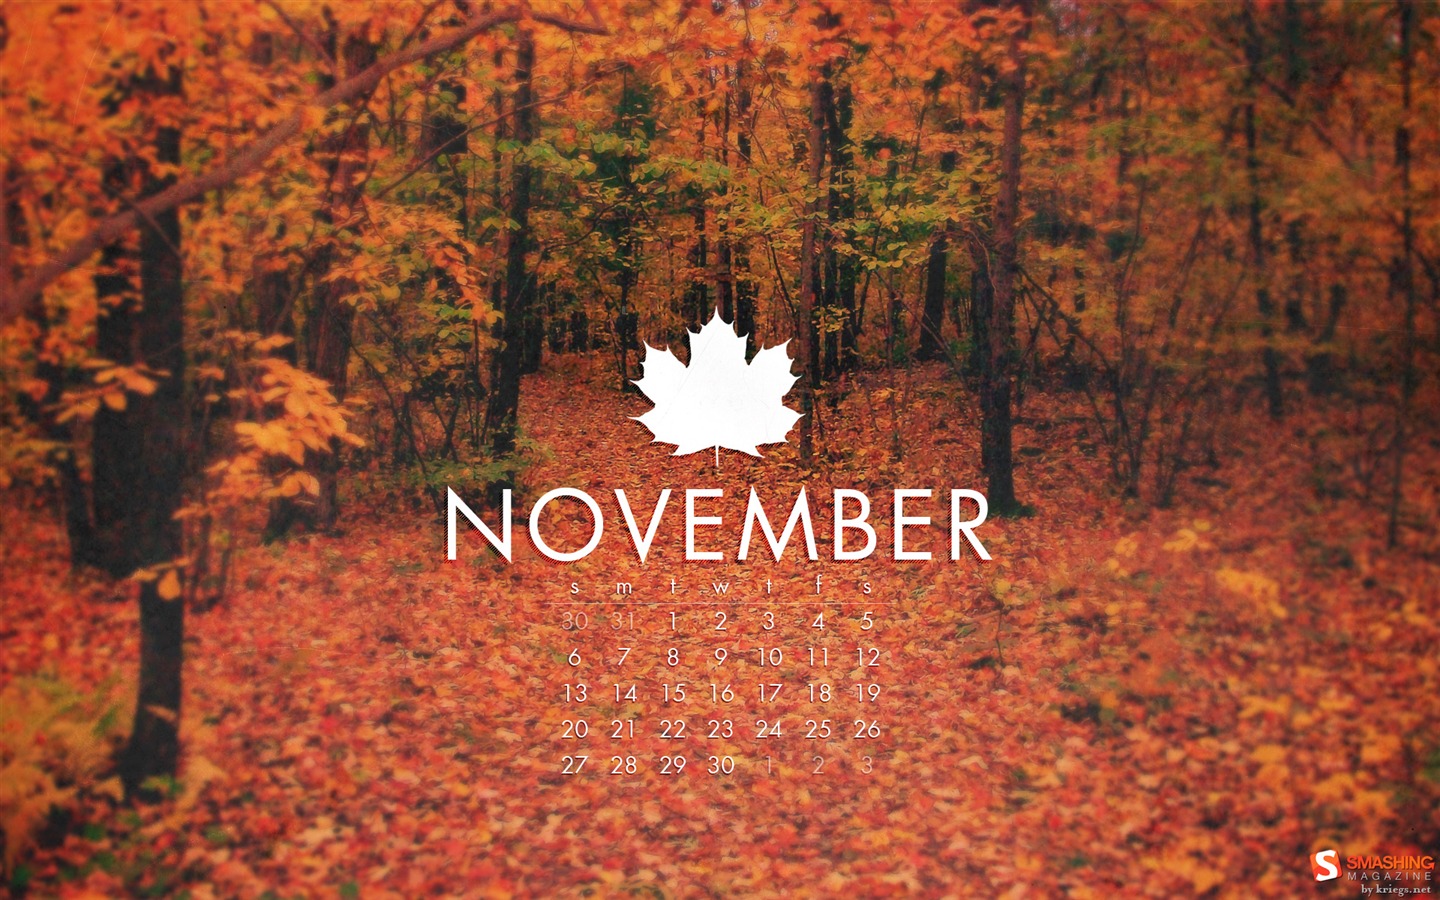 November 2011 Kalender Wallpaper (2) #11 - 1440x900